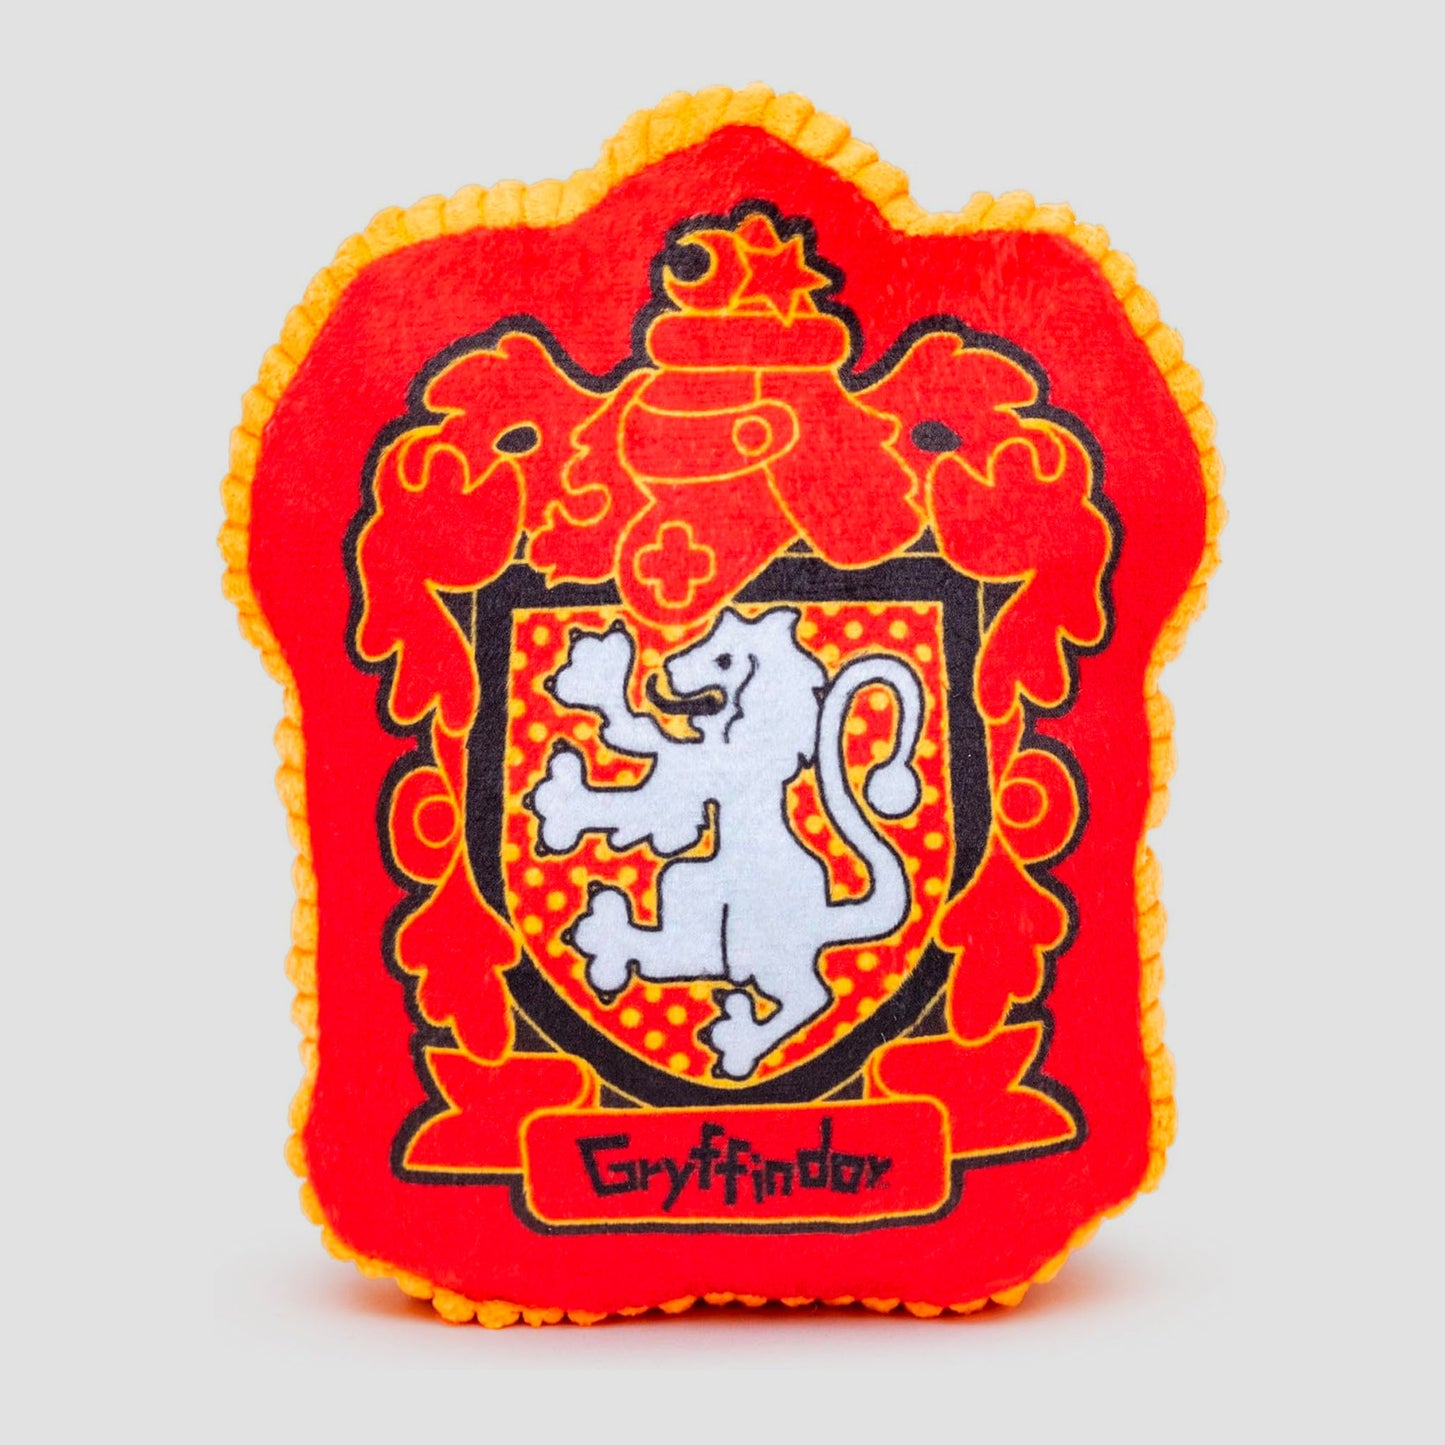 Gryffindor Crest (Harry Potter) Dog Plush Squeaker Toy